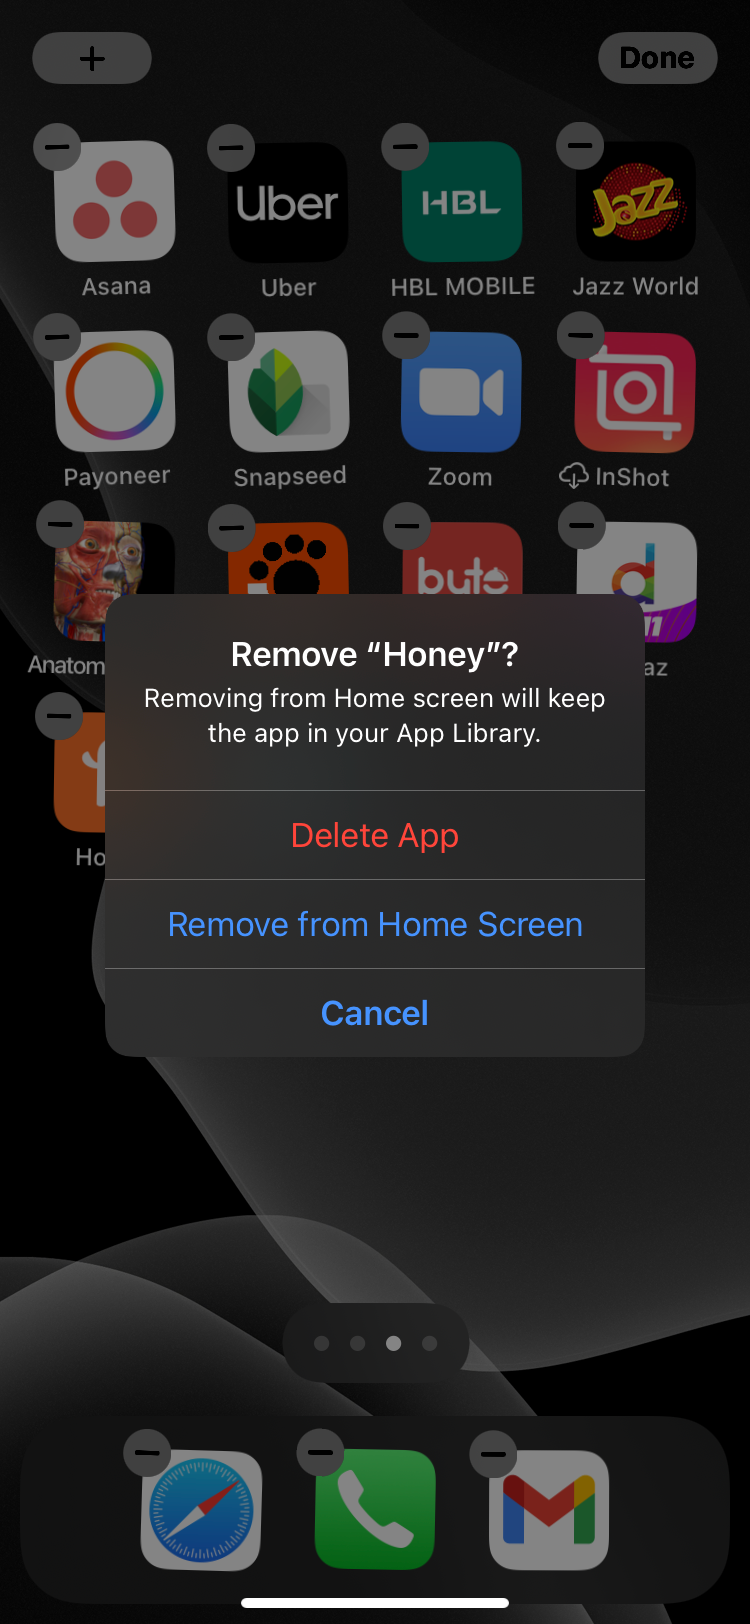 A screenshot of deleting an app